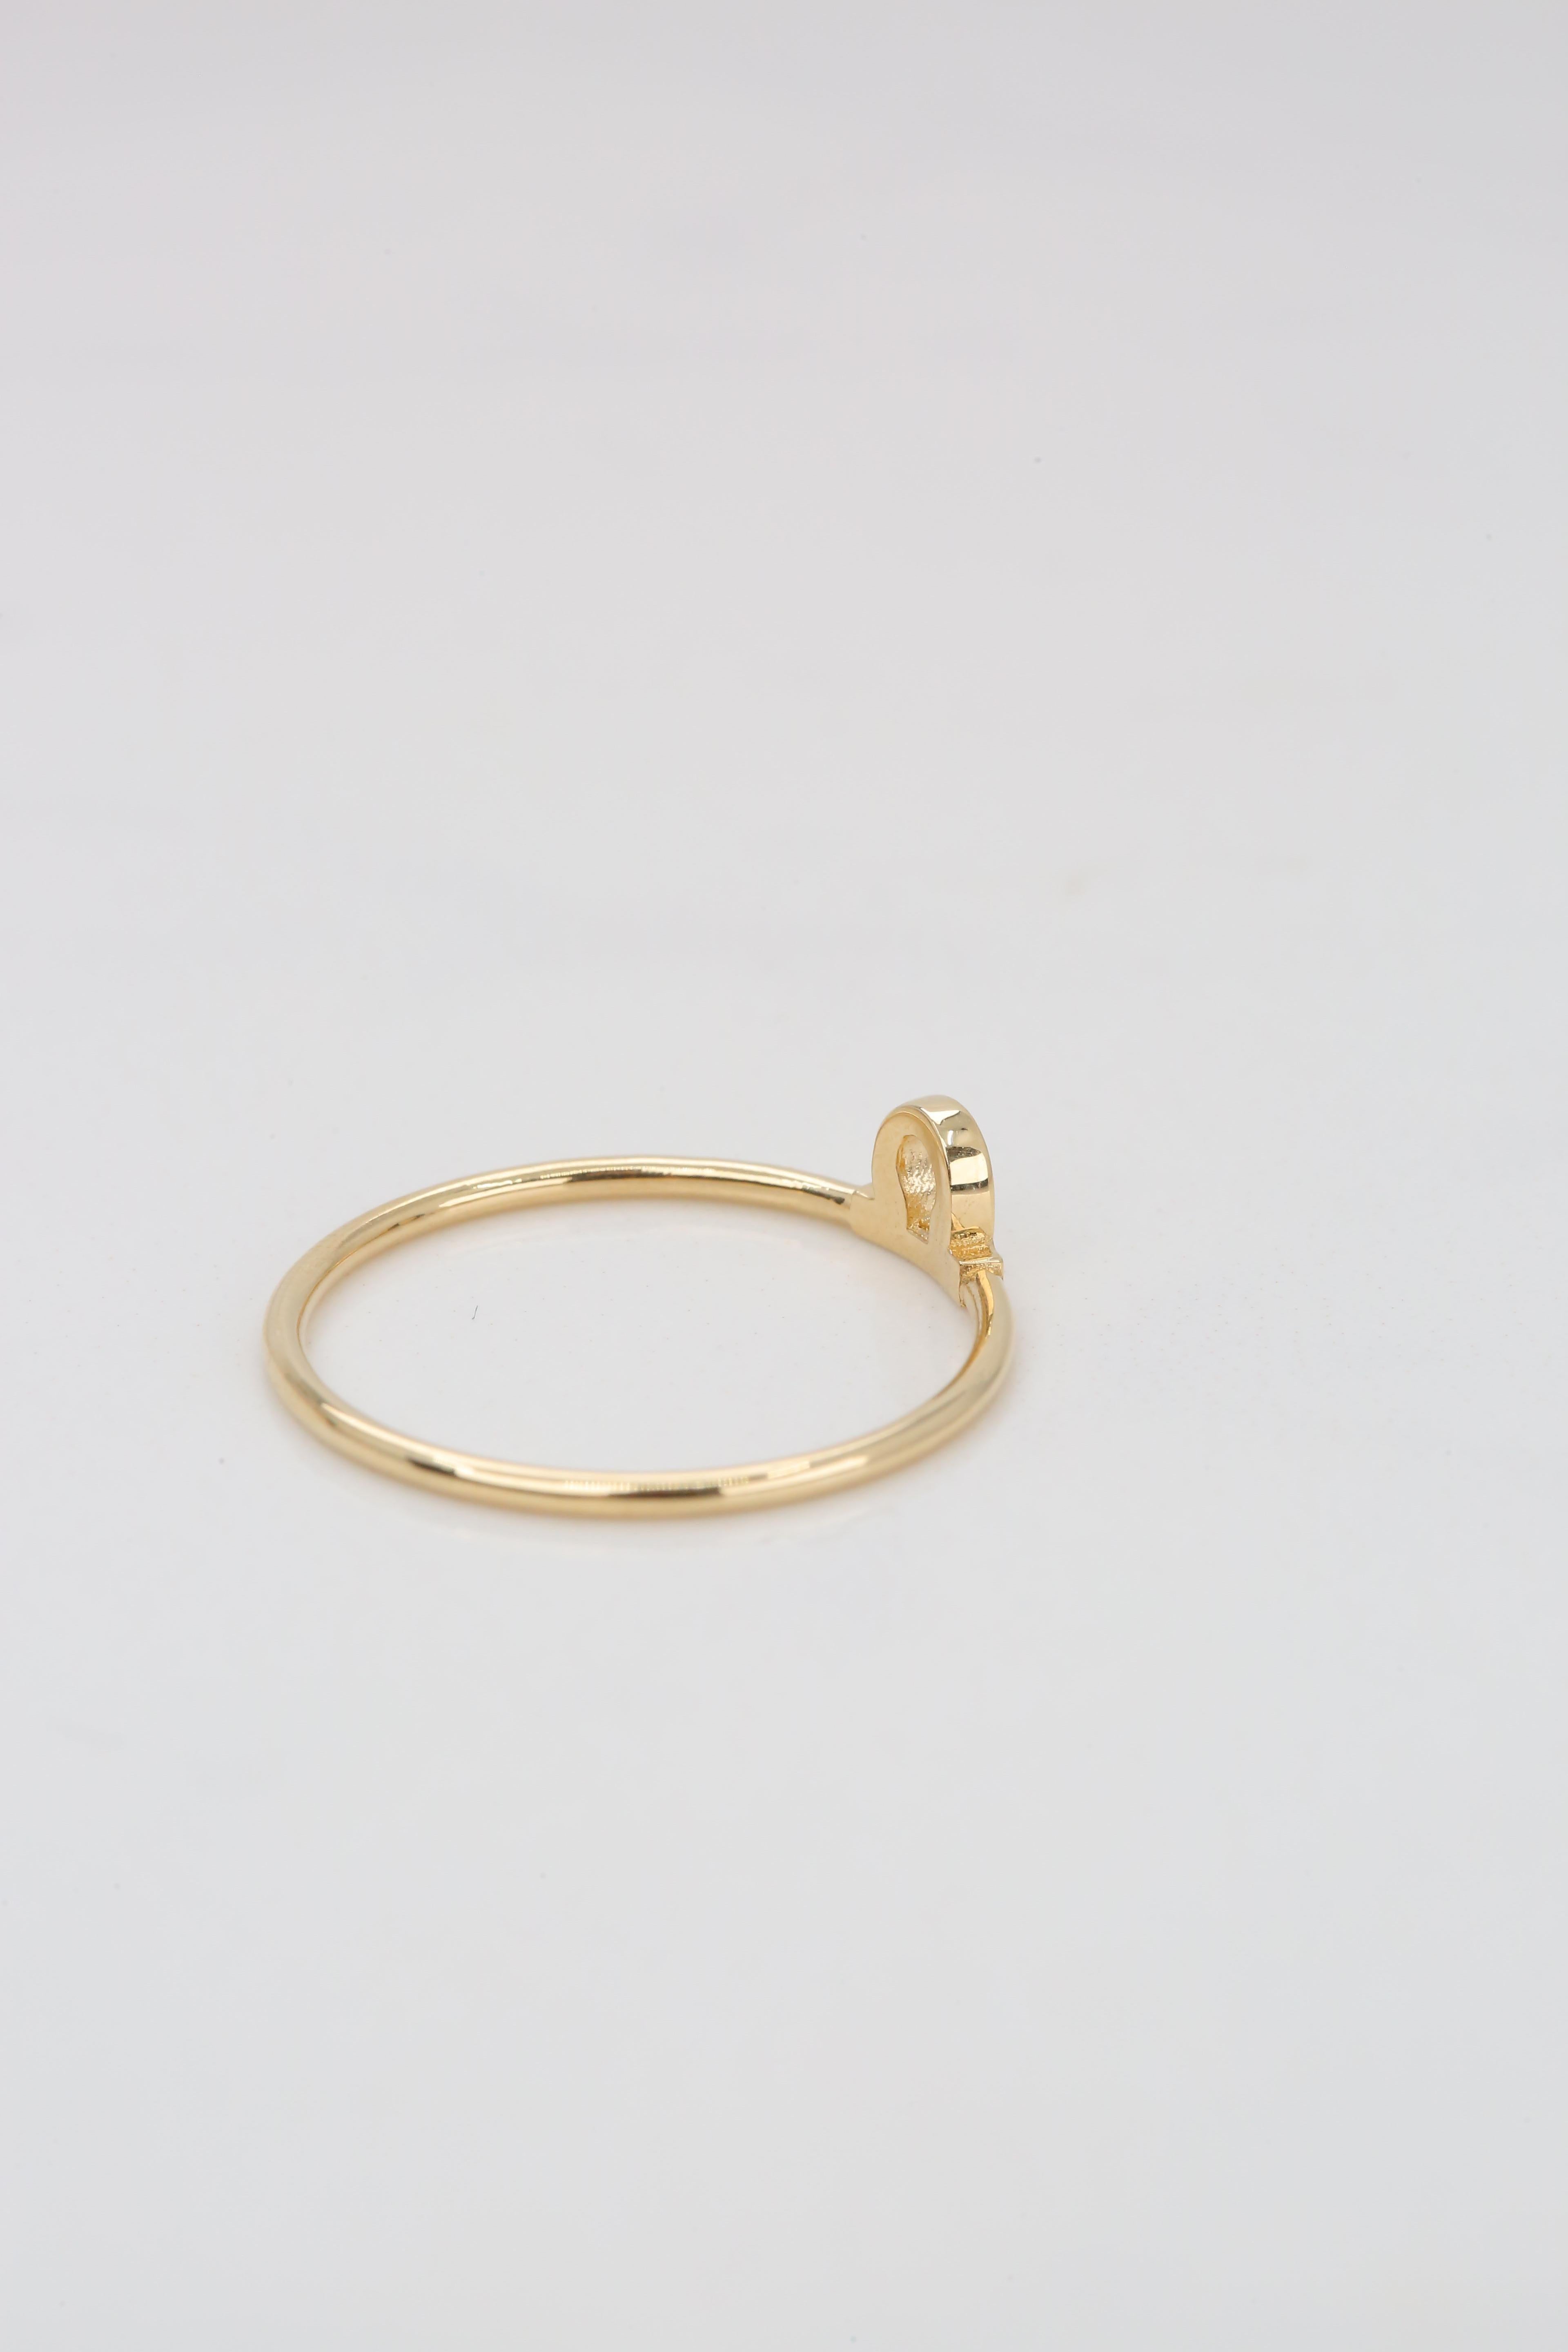 For Sale:  14k Gold Libra Ring, Libra Sign Gold Ring 6